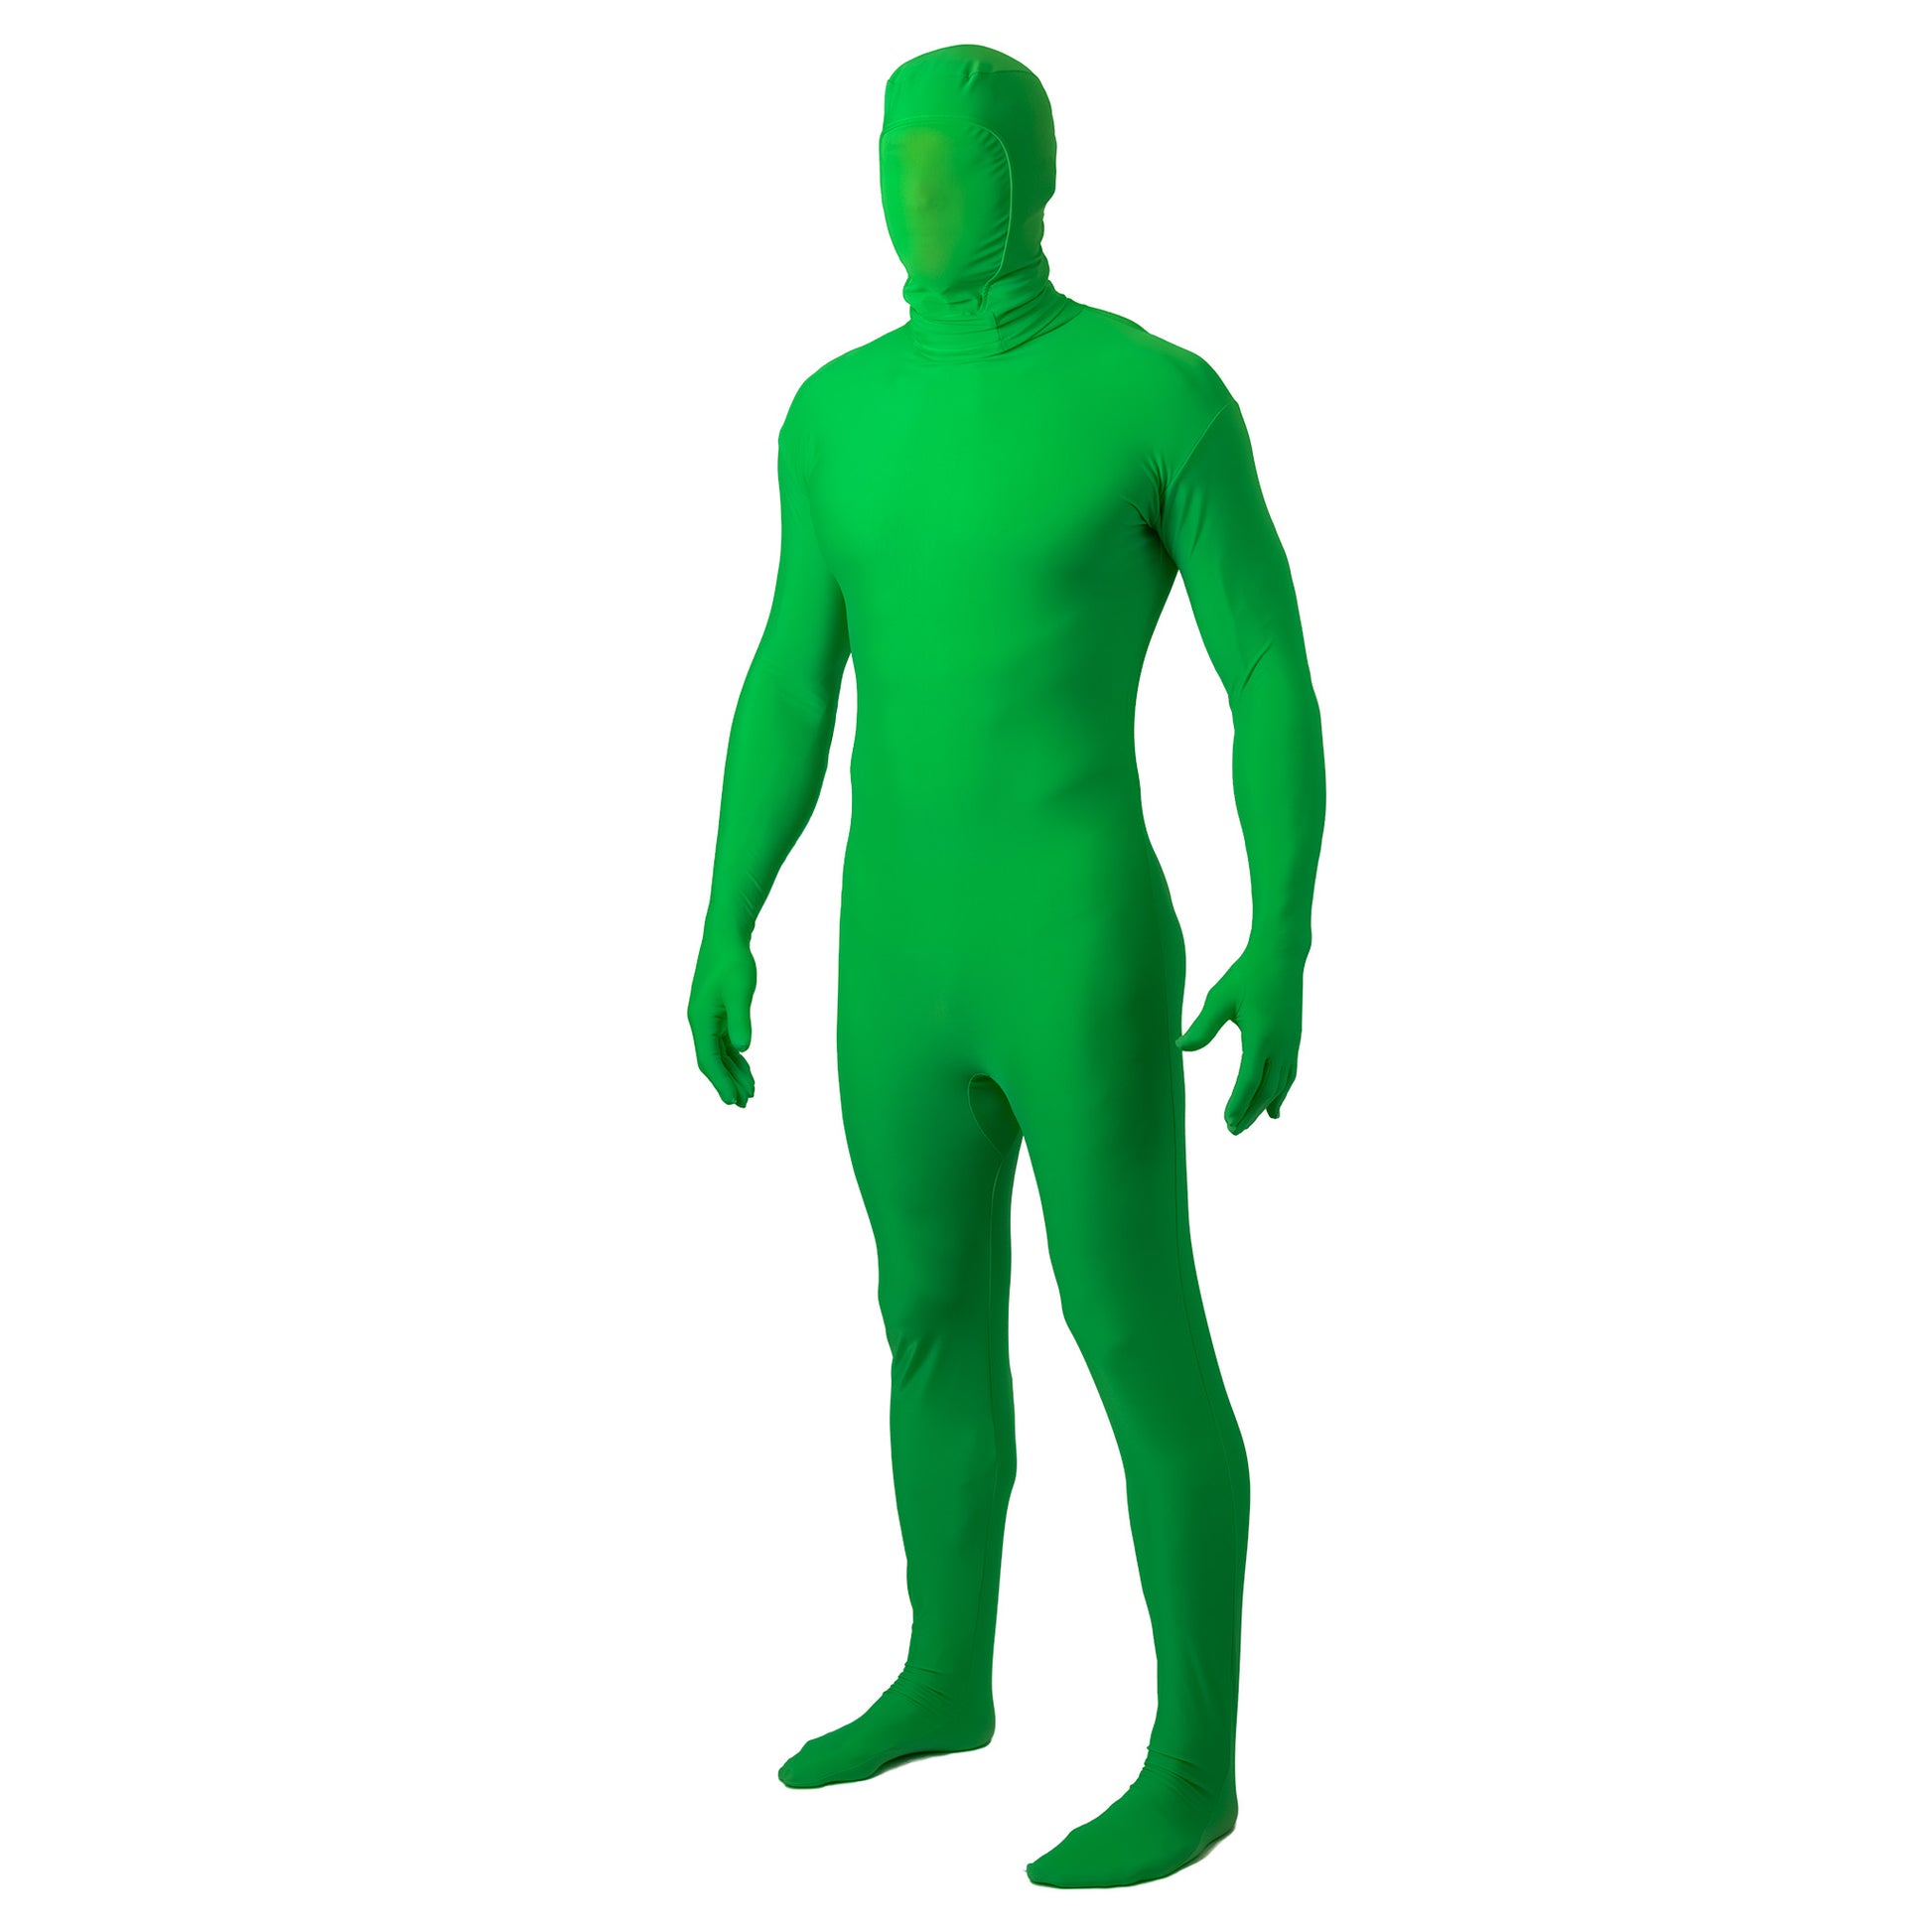 chroma key green screen suit angle